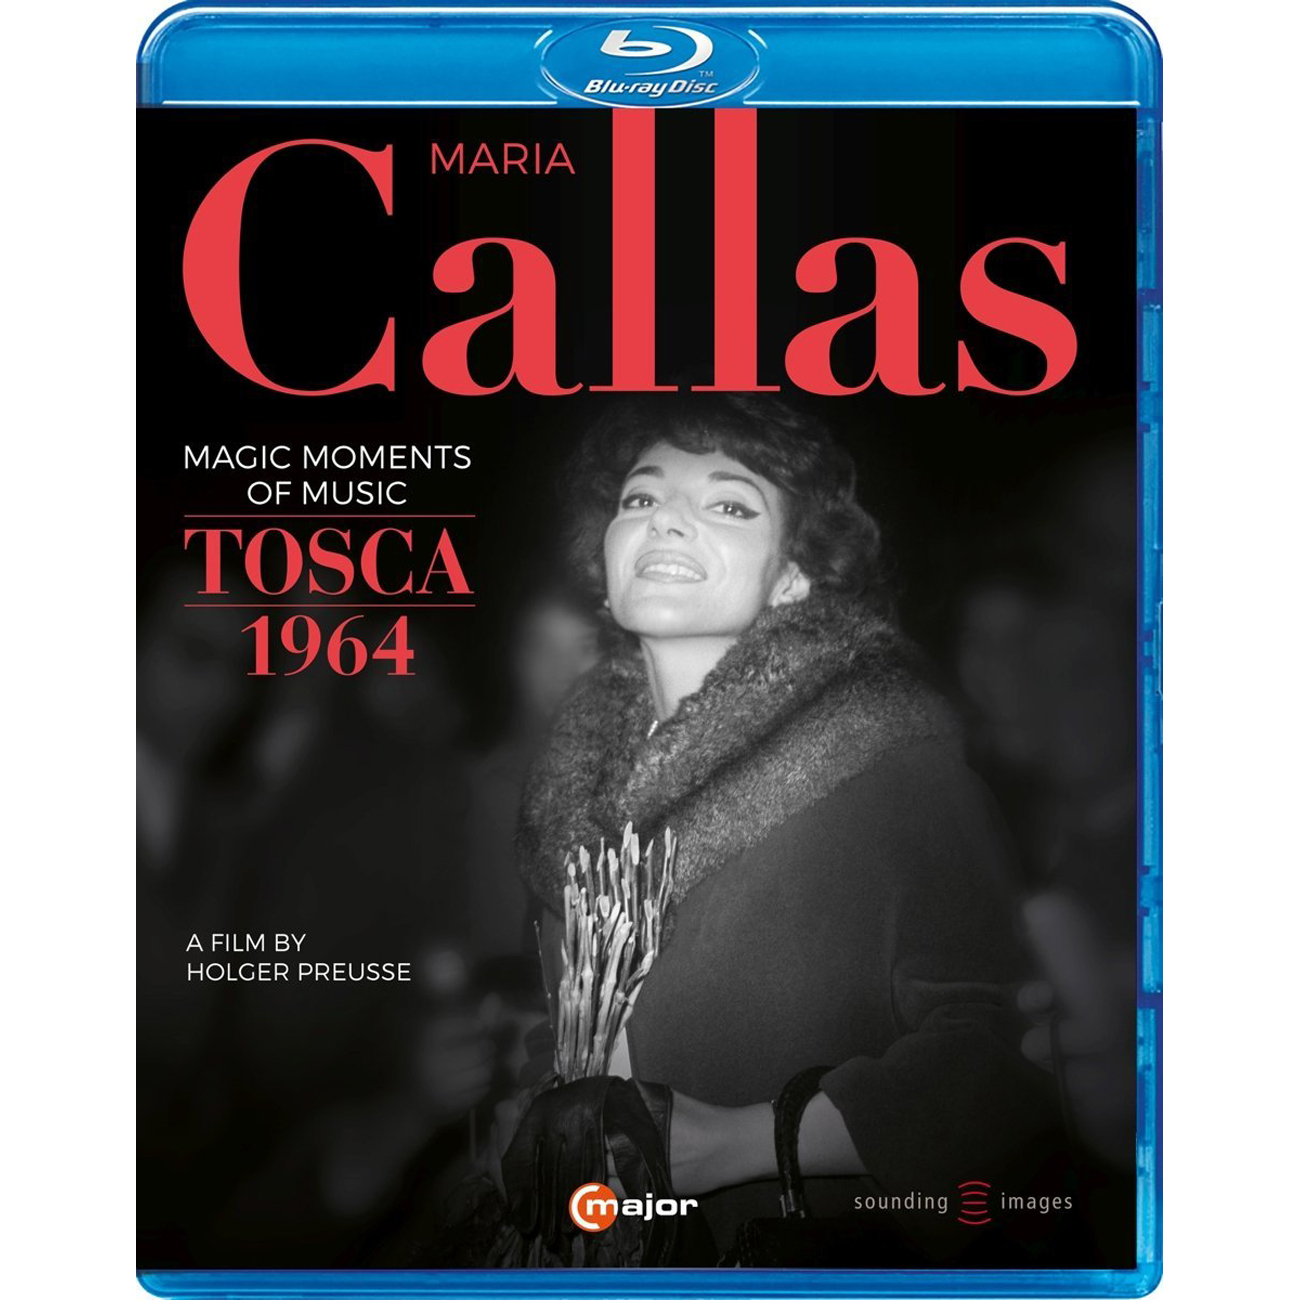 Maria Callas Magic Moments of Music Tosca 1964 Blu ray 